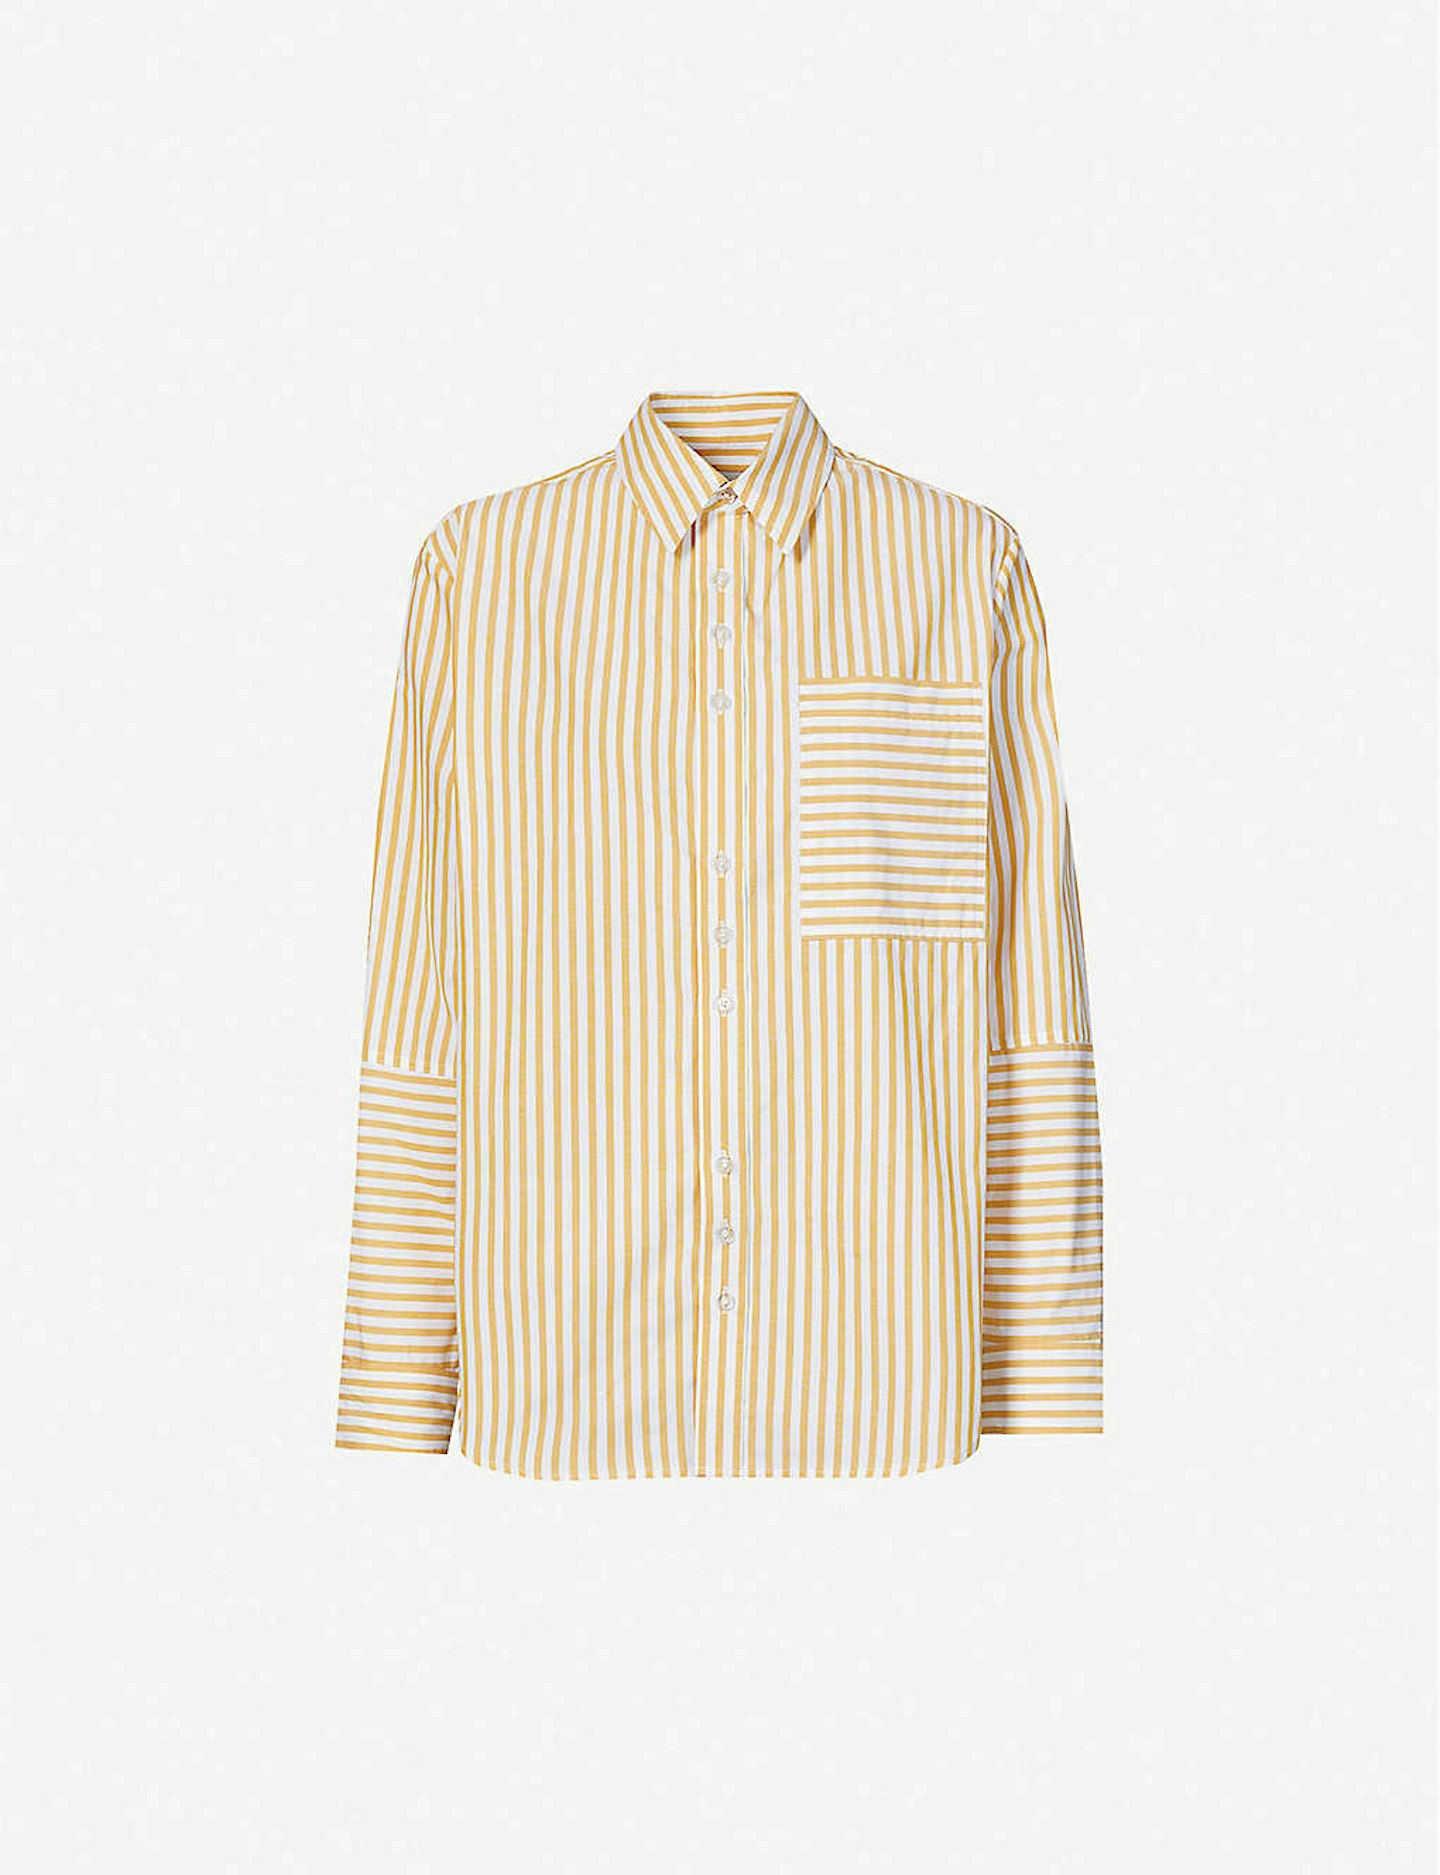 Riley Studio, Classic loose-fit organic-cotton shirt, £160